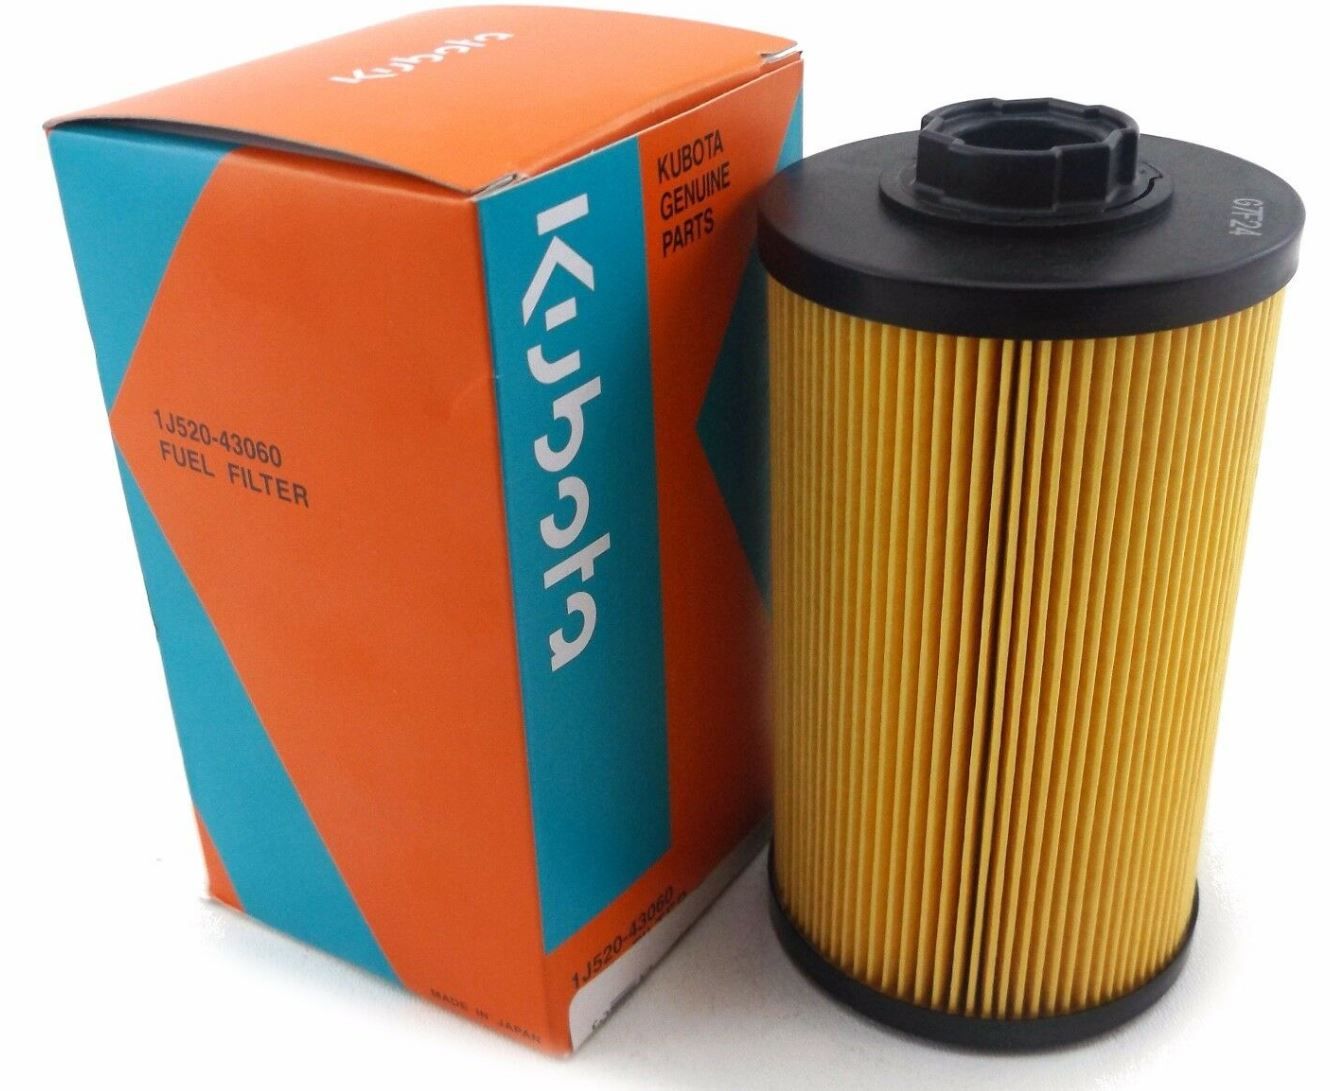 Kubota 1J520-43060 Assy Element, Filter